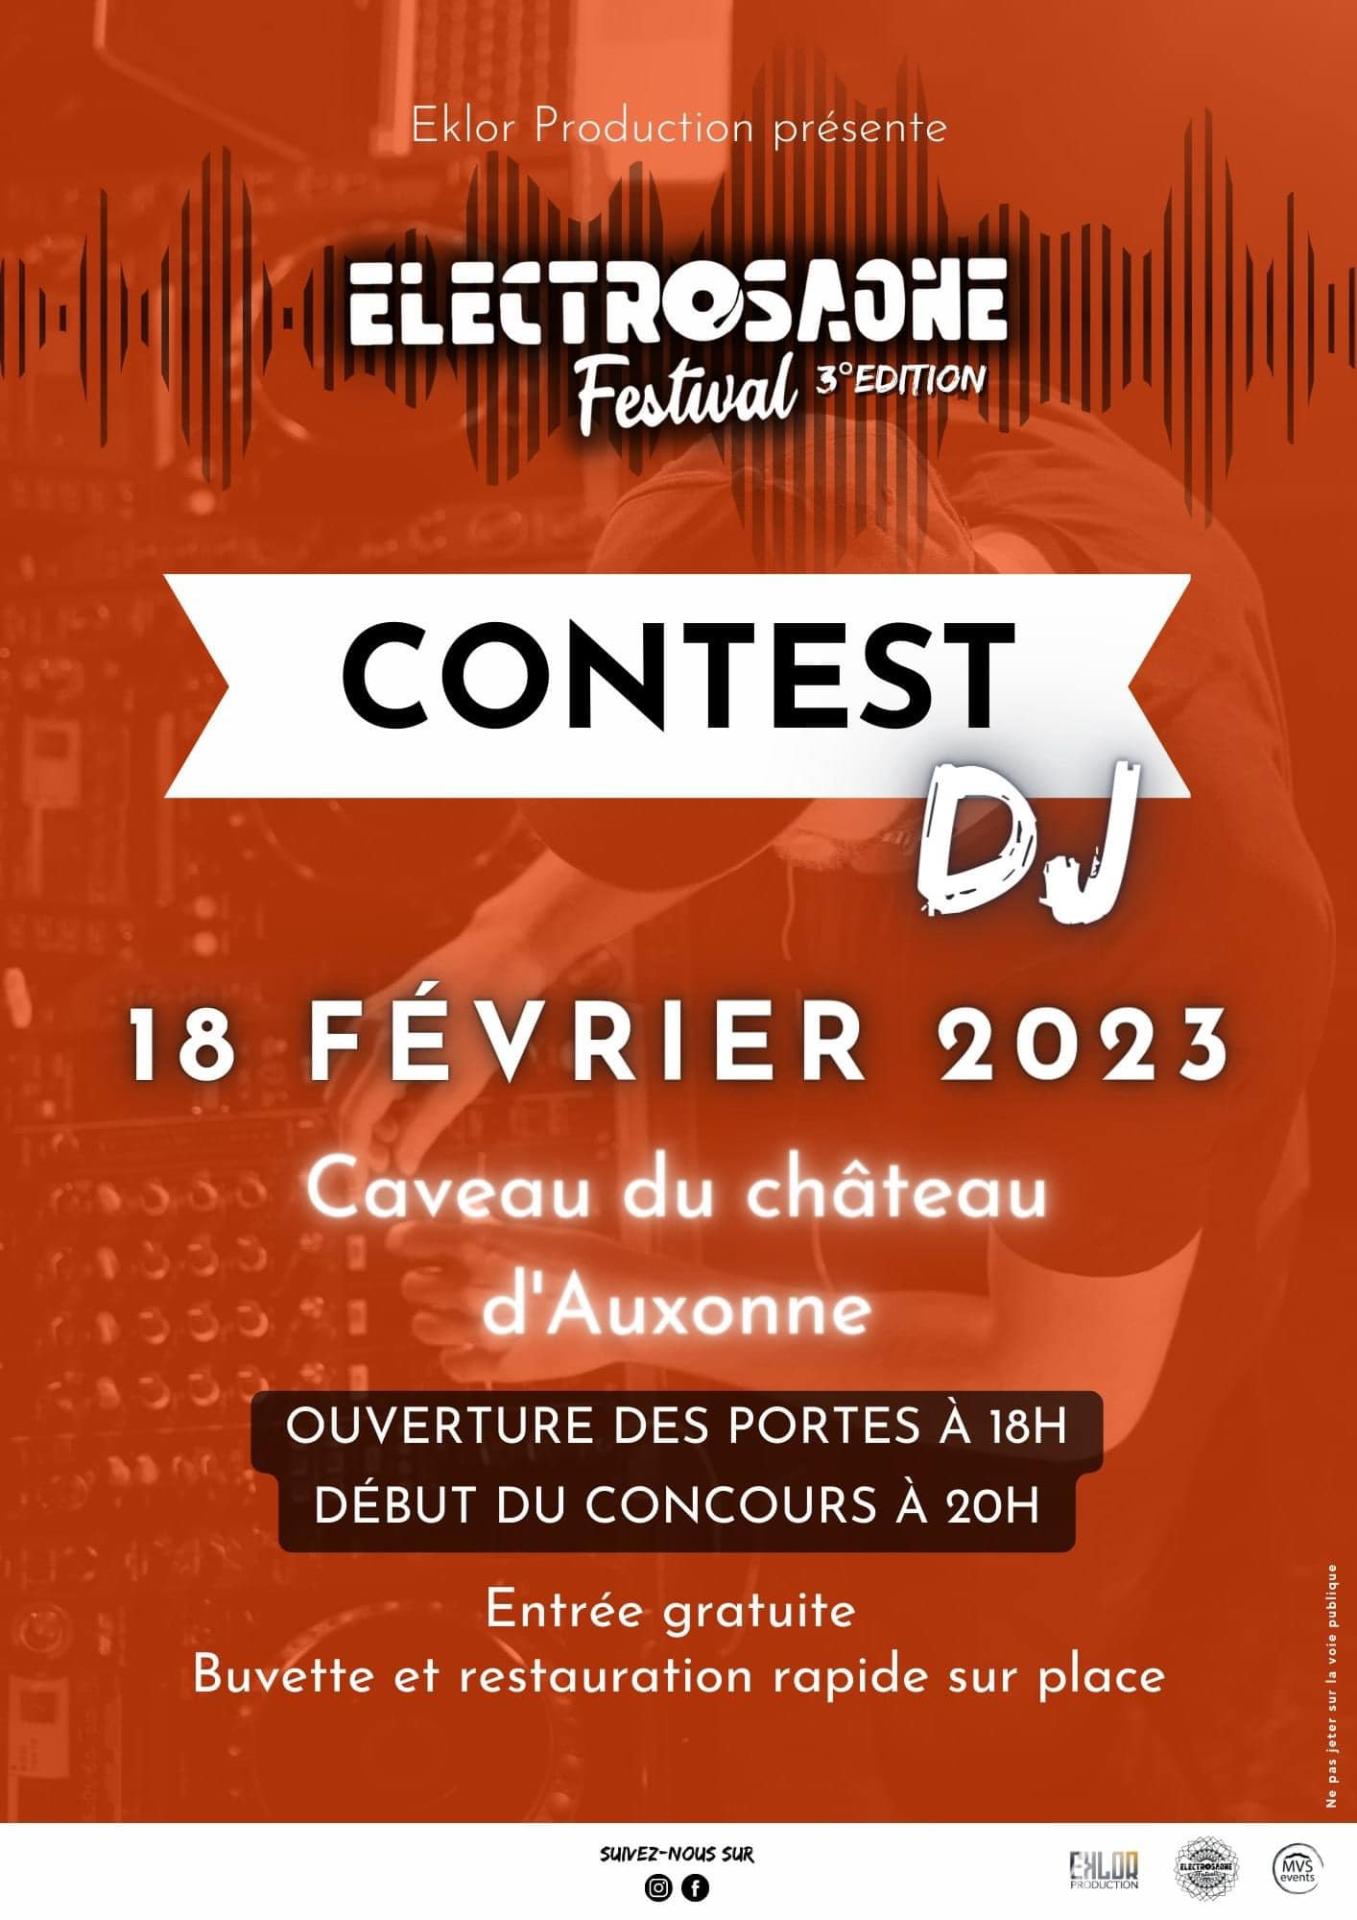 Contest DJ ELECTROSAONE